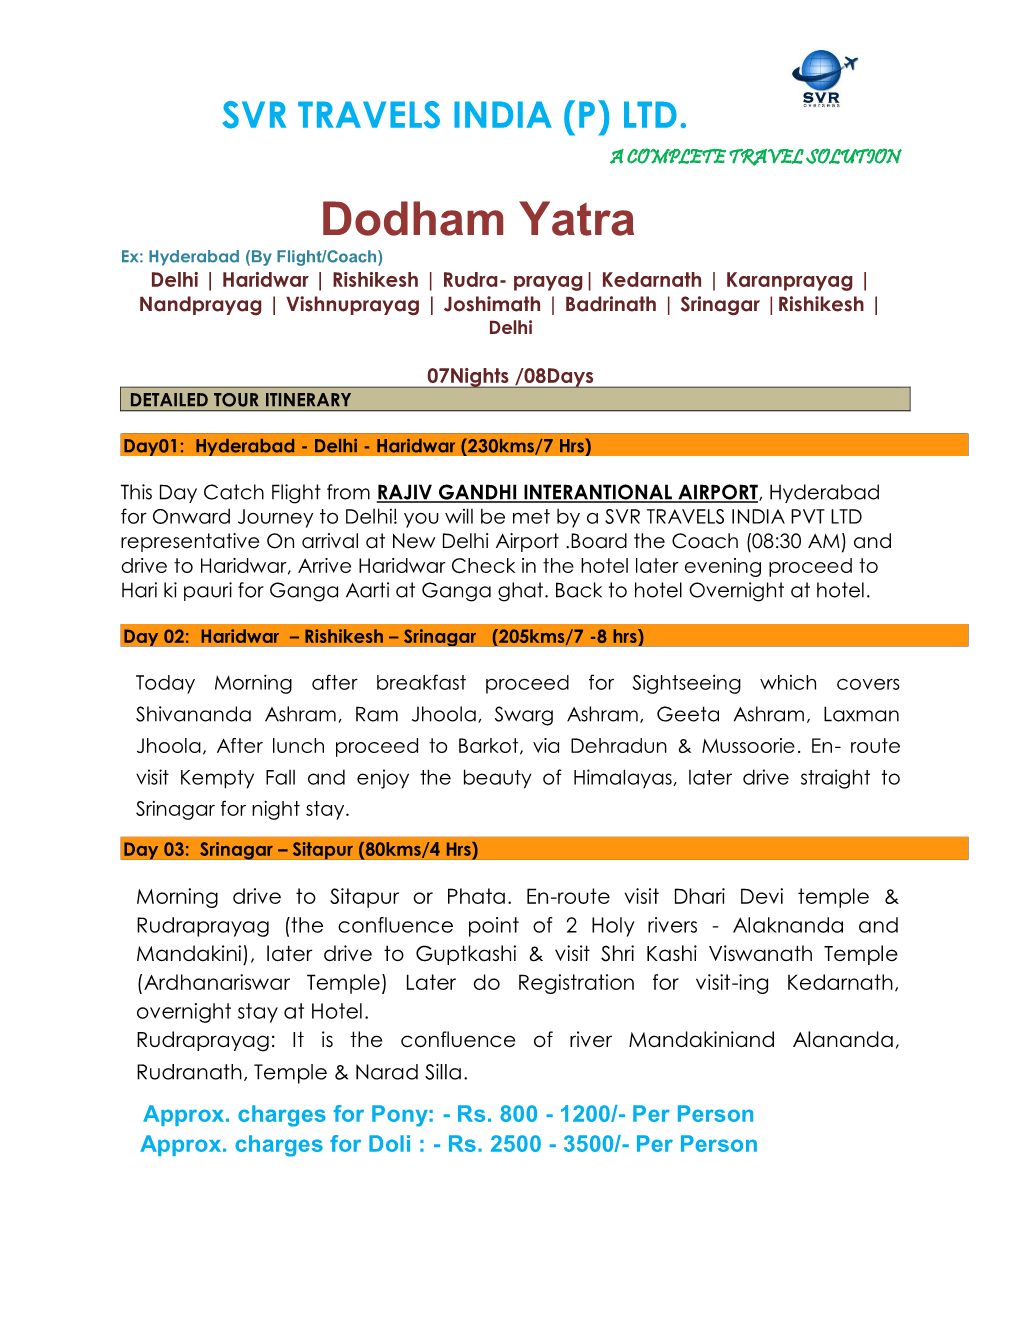 Dodham Yatra